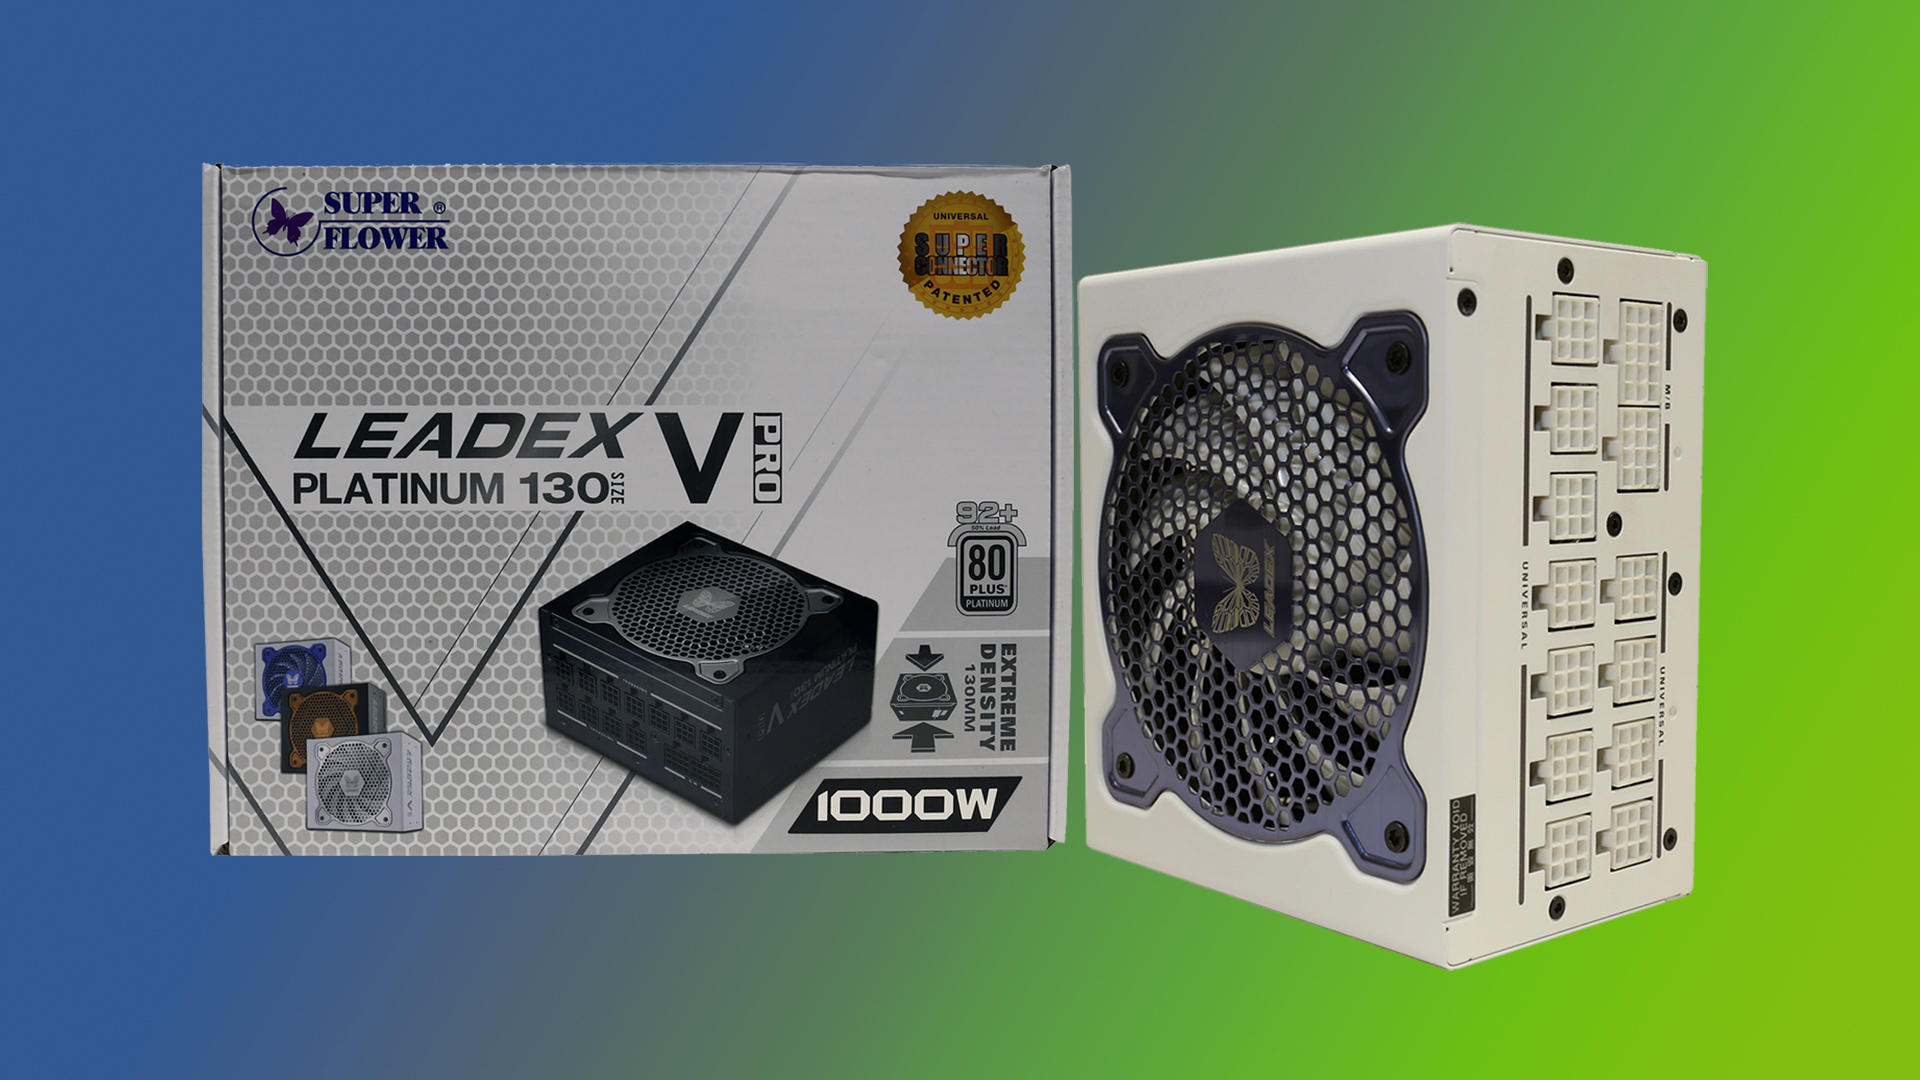 Super Flower Leadex V Platinum Pro 1000W Power Supply Review